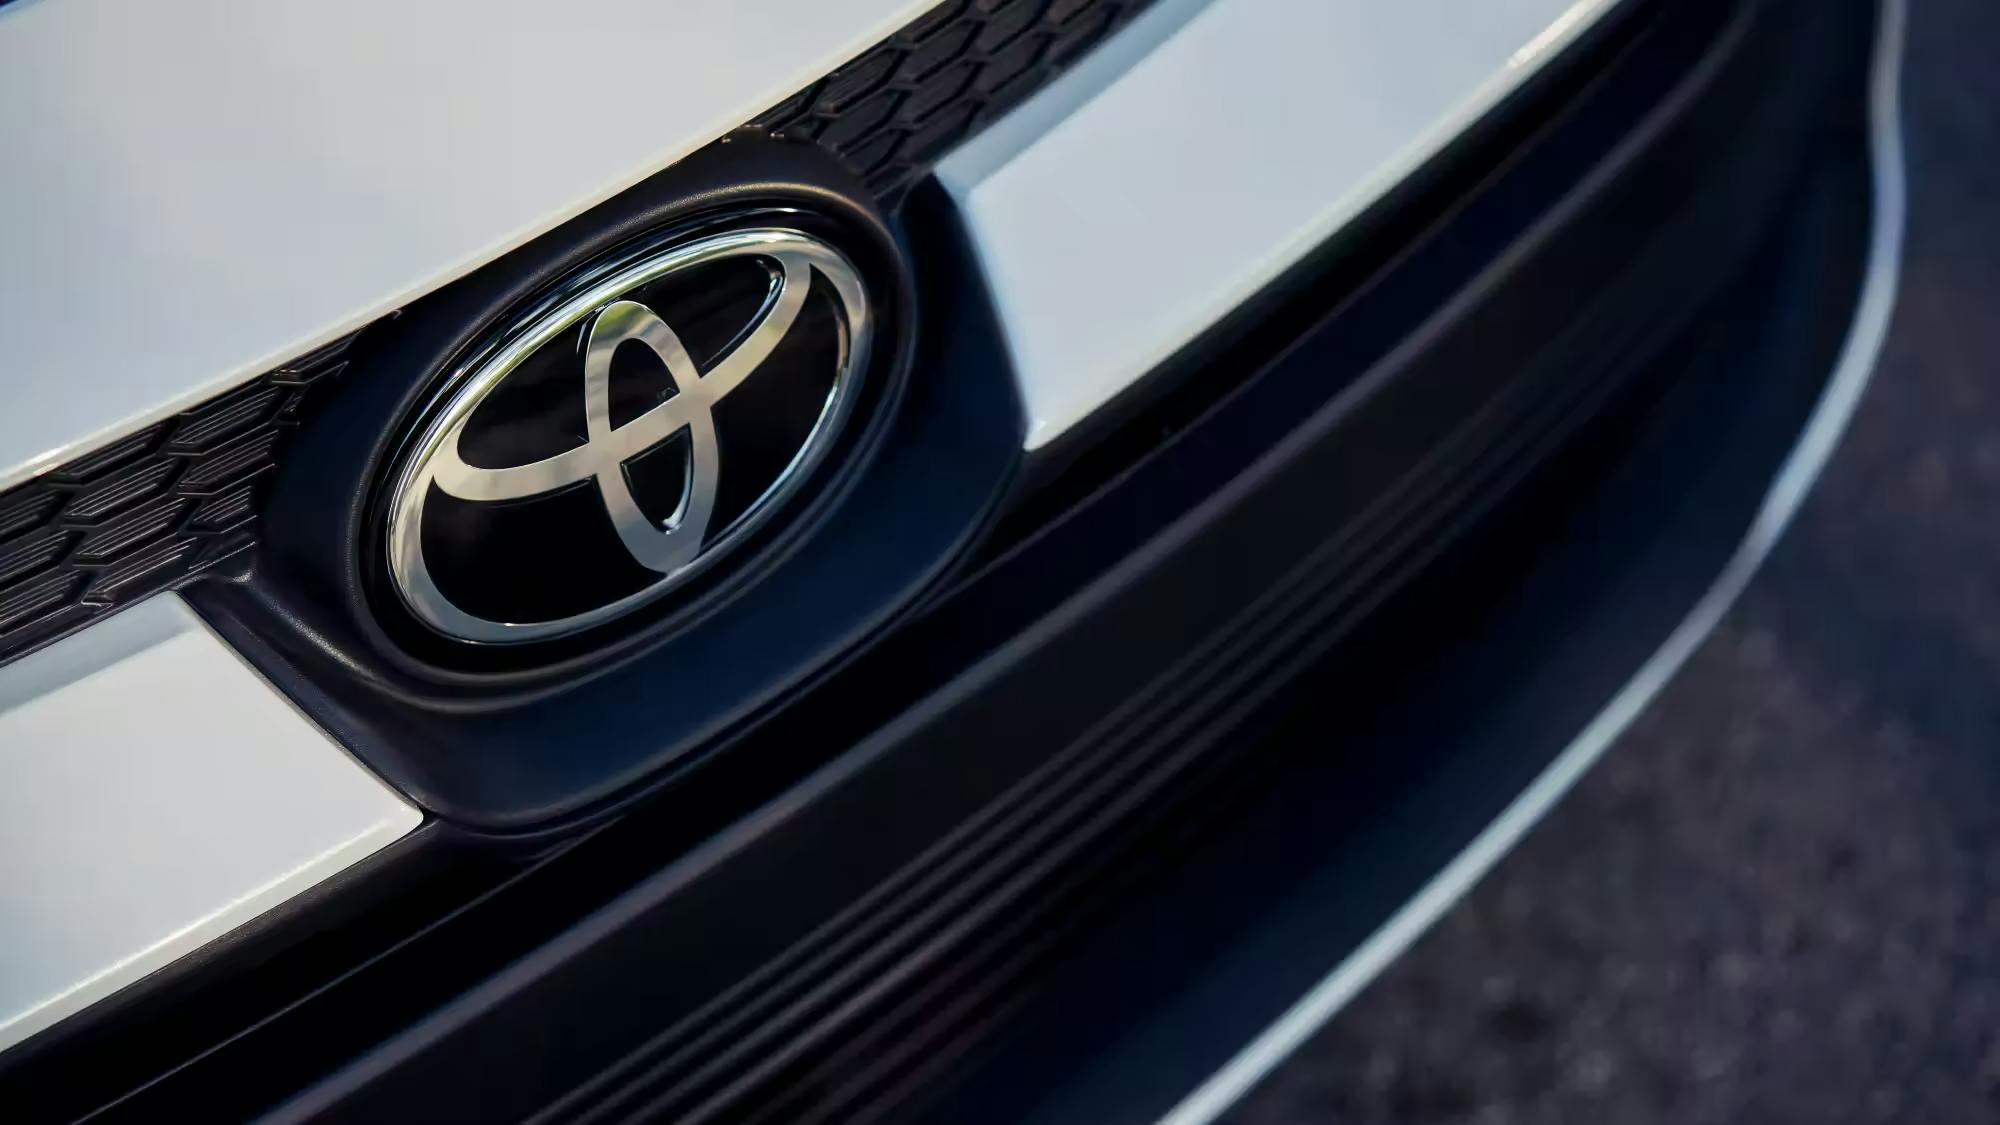 Toyota logo close up view on a white Toyota Corolla.